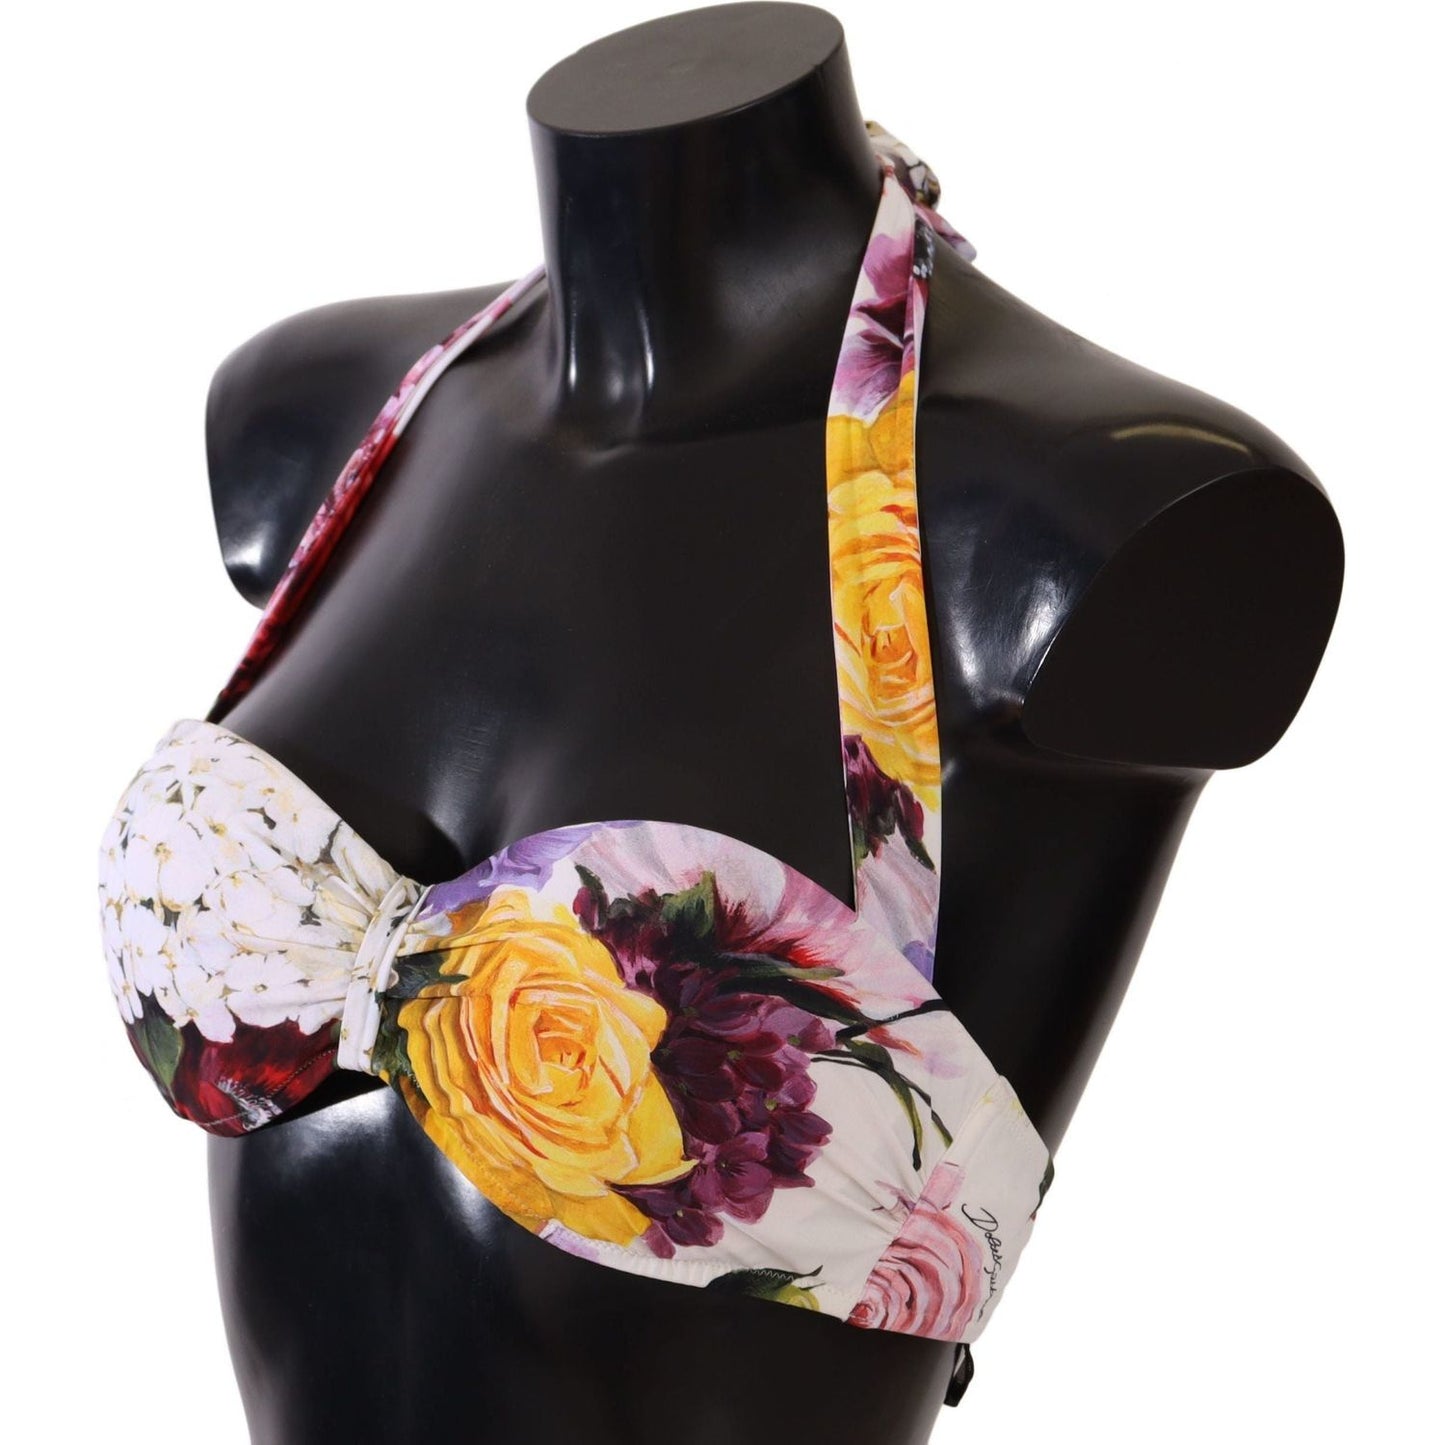 Dolce & Gabbana Chic Floral Print Bikini Top - Summer Essential WOMAN SWIMWEAR multicolor-floral-swimsuit-bikini-top-swimwear